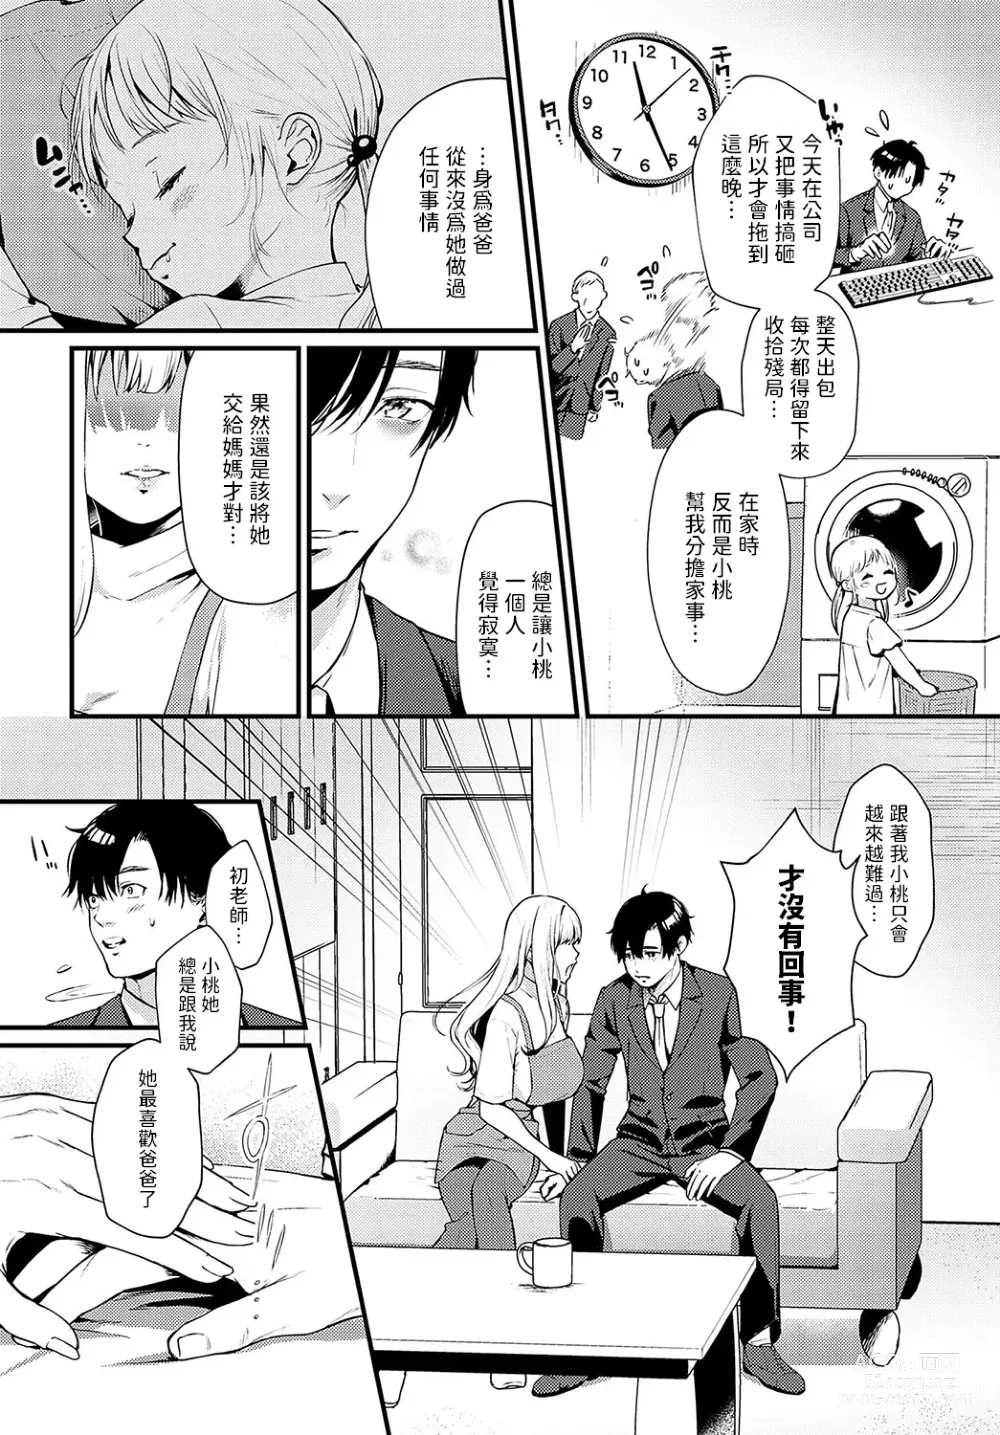 Page 4 of manga Yuuwaku Sweets Home